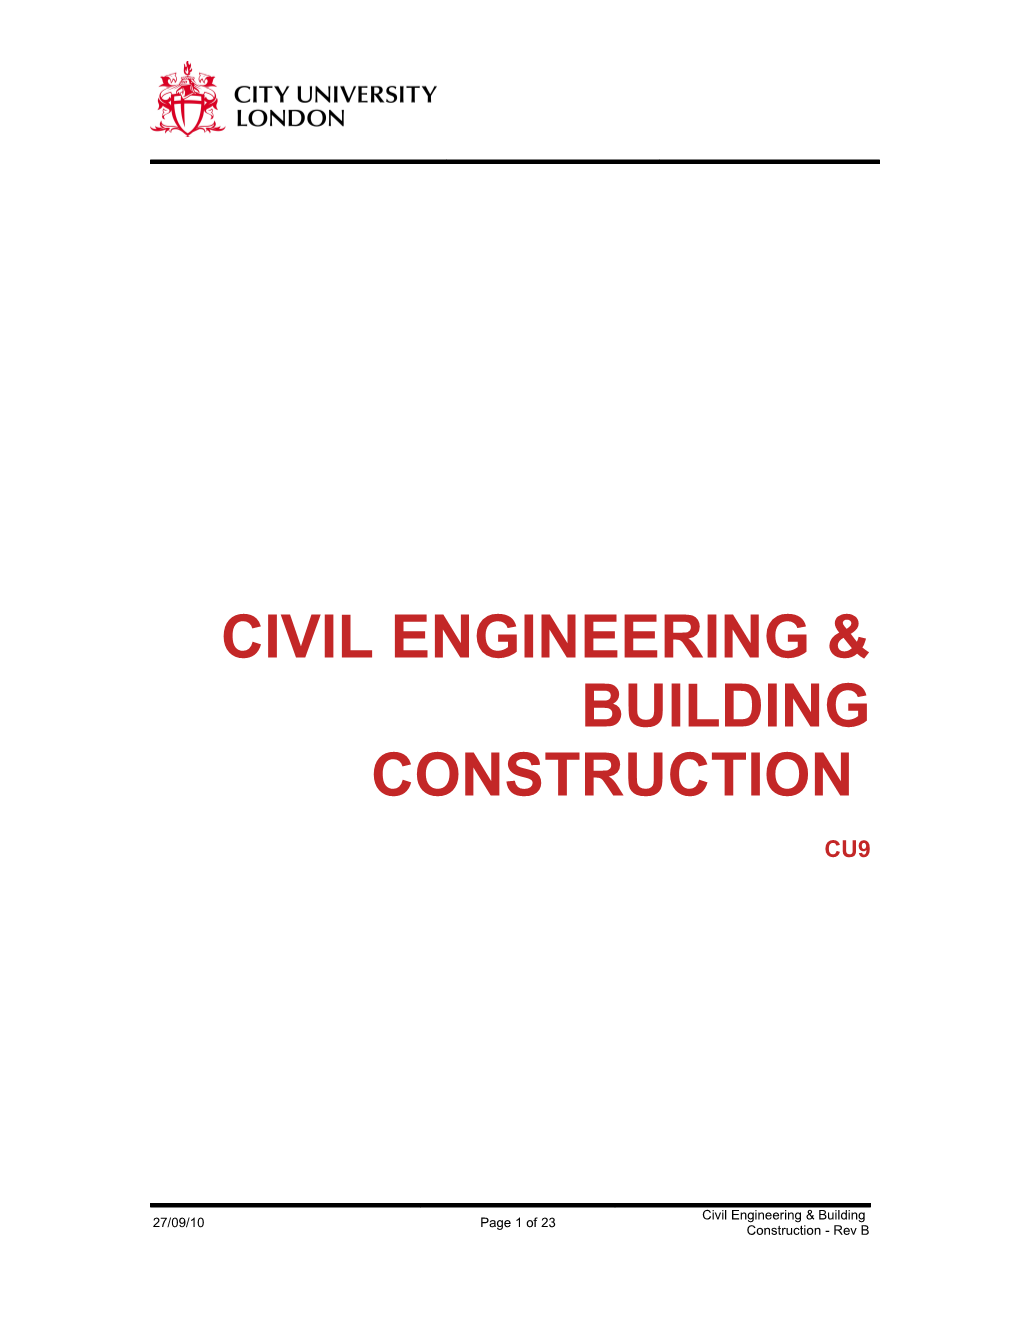 Civil Engineering & Building Construction